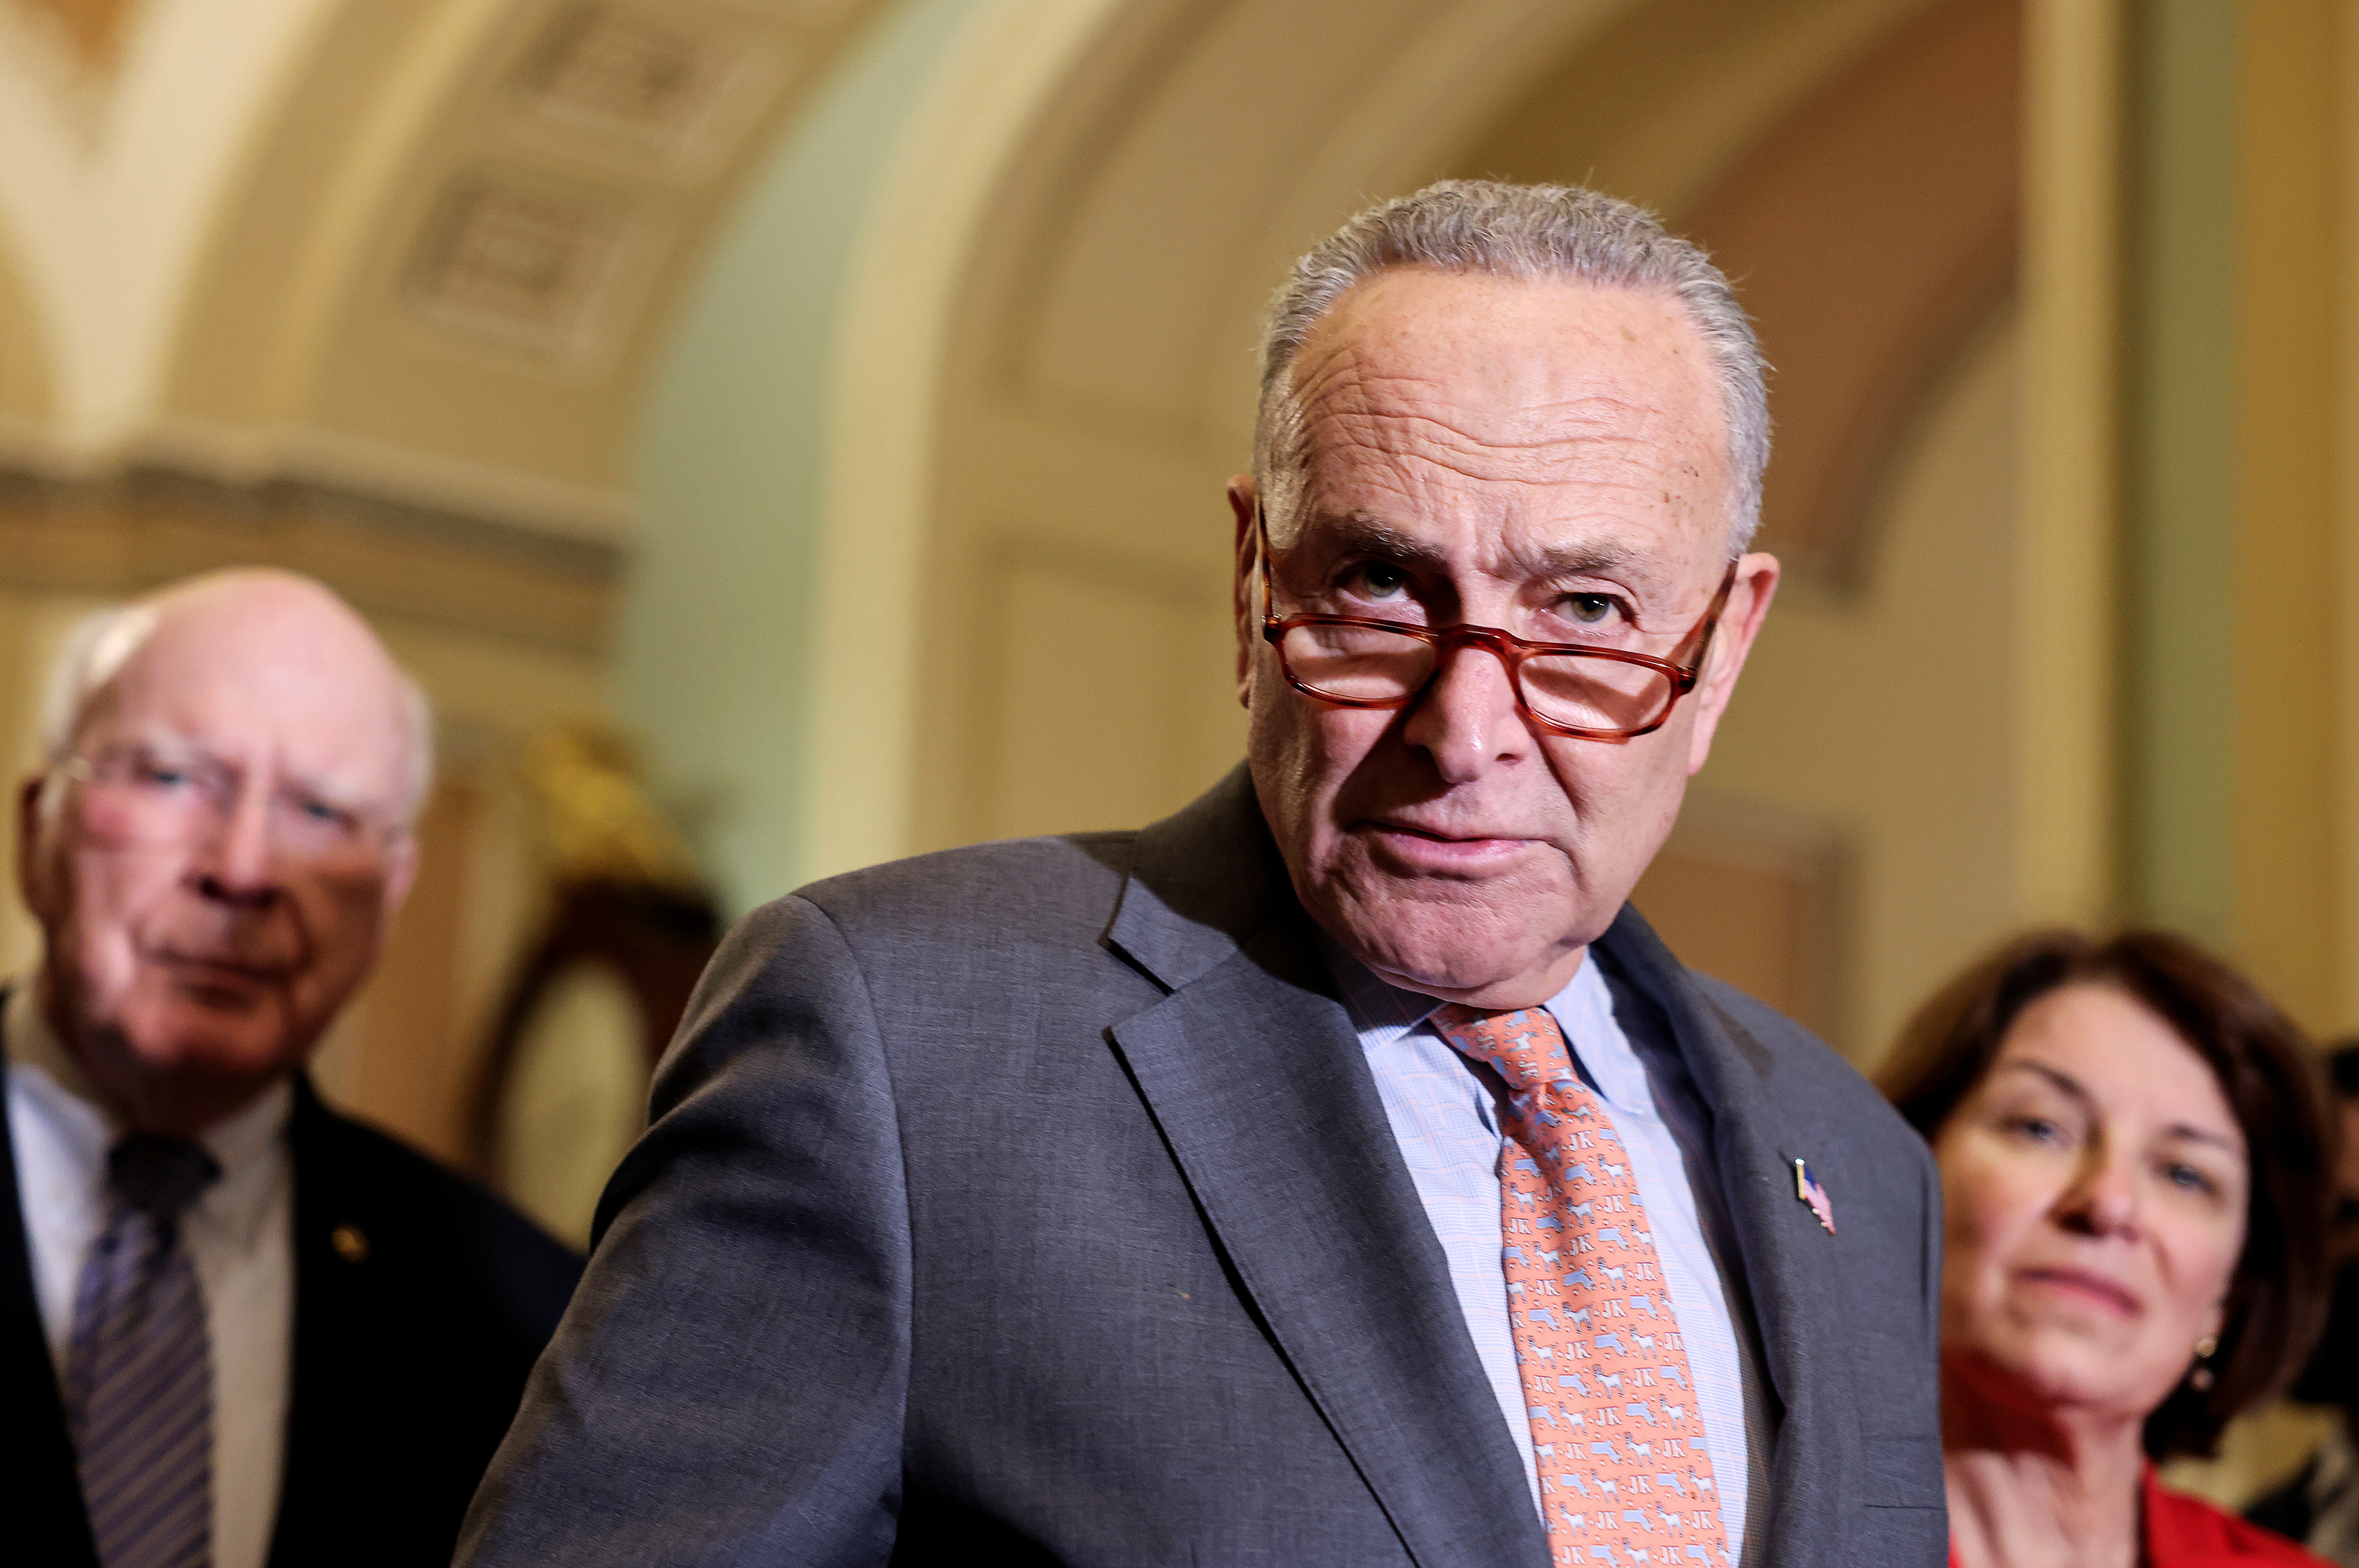 U.S. Senate Democrats hold weekly policy lunch at U.S. Capitol in Washington